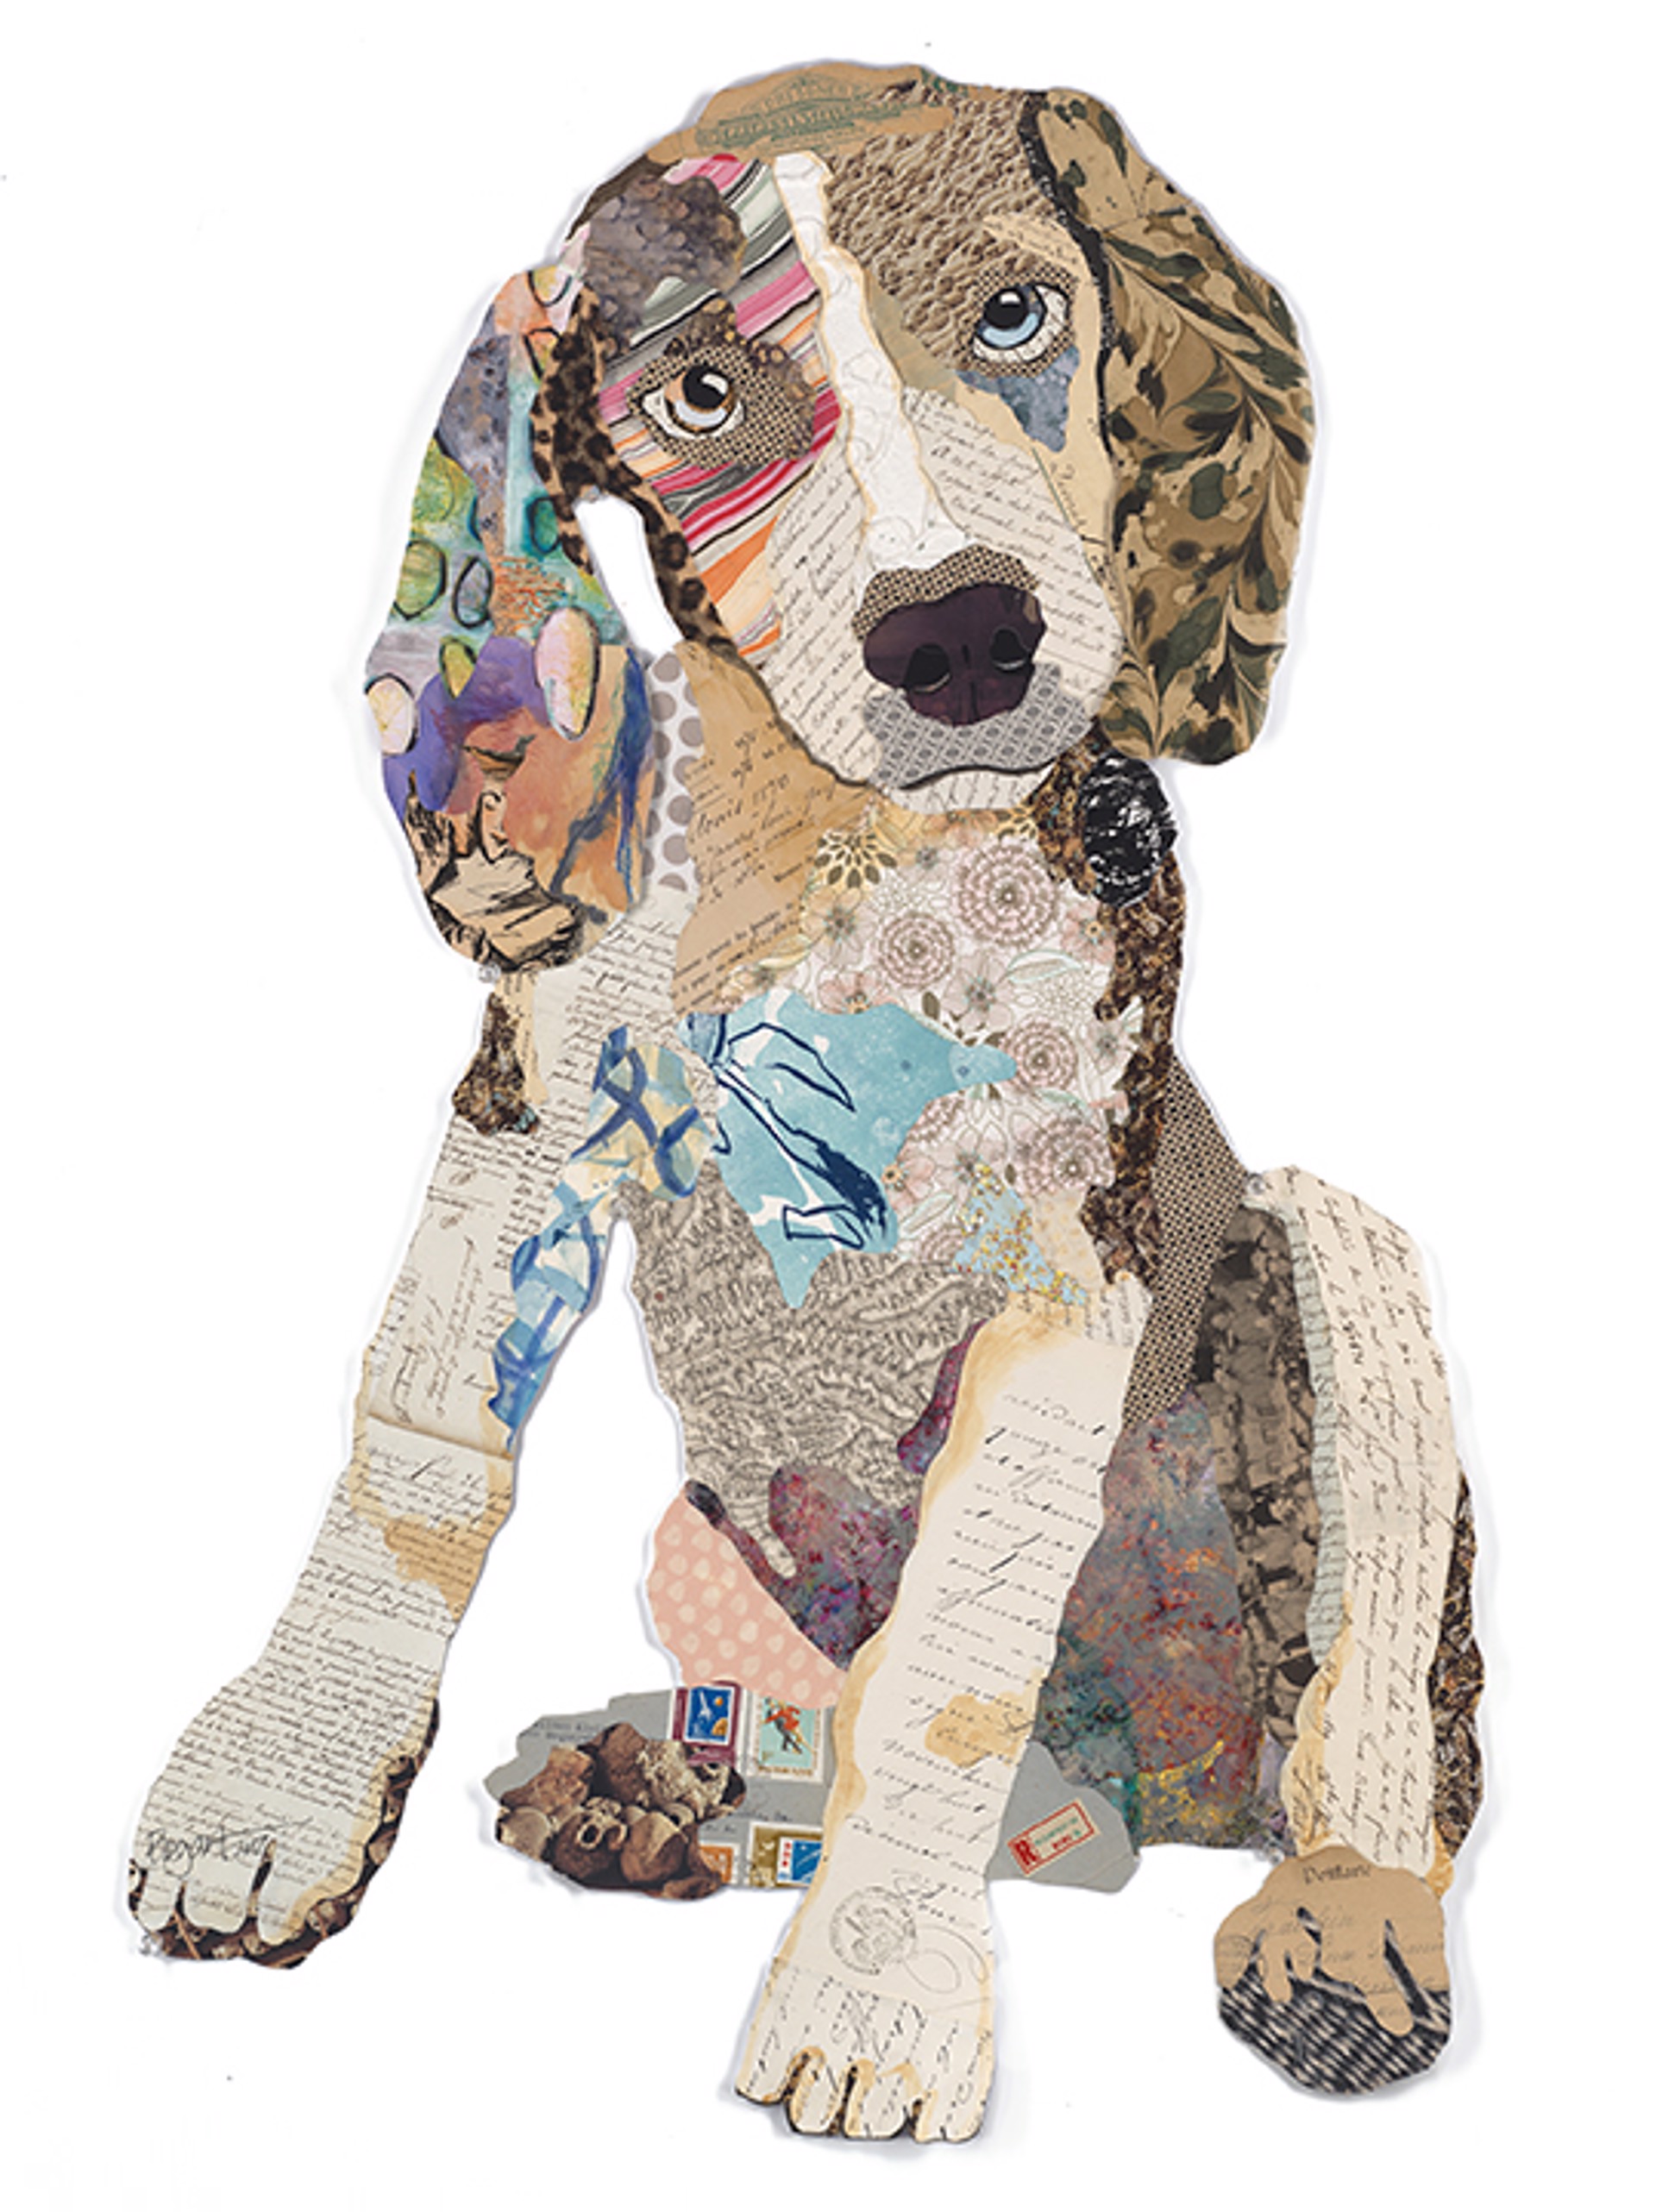 Beagle Puppy by Brenda Bogart - Prints